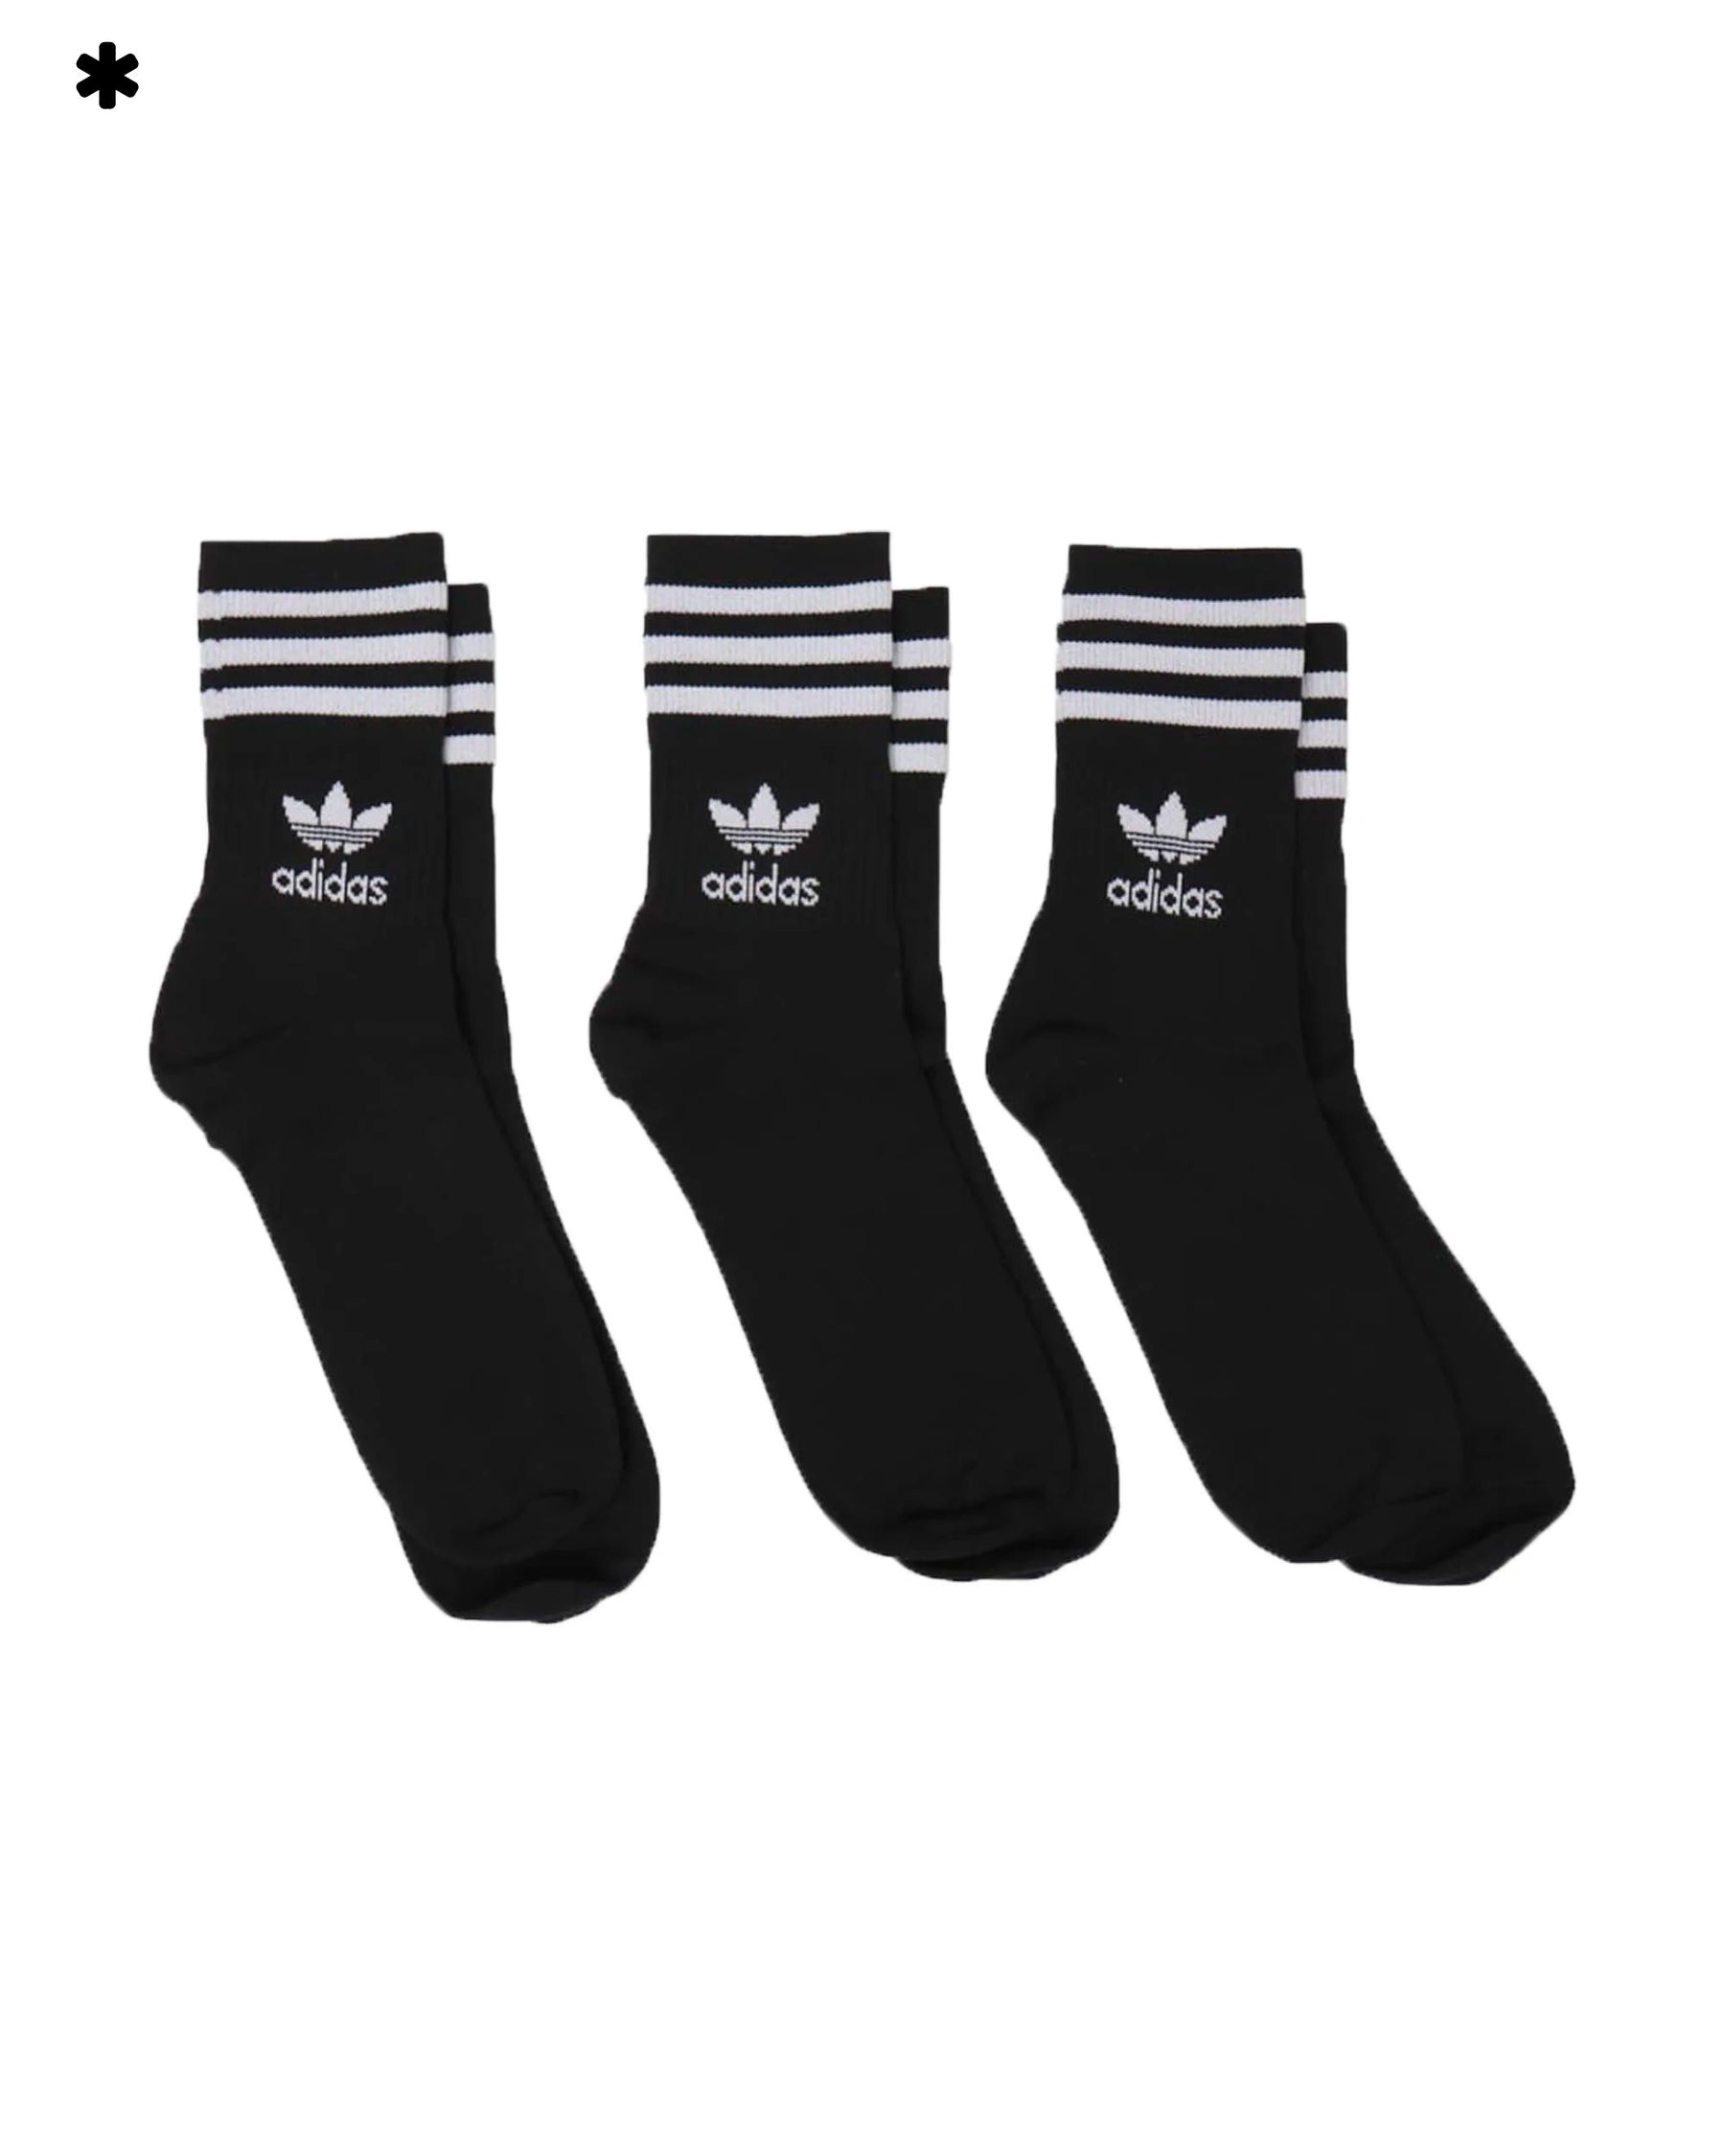 Classic Socks Adidas Black